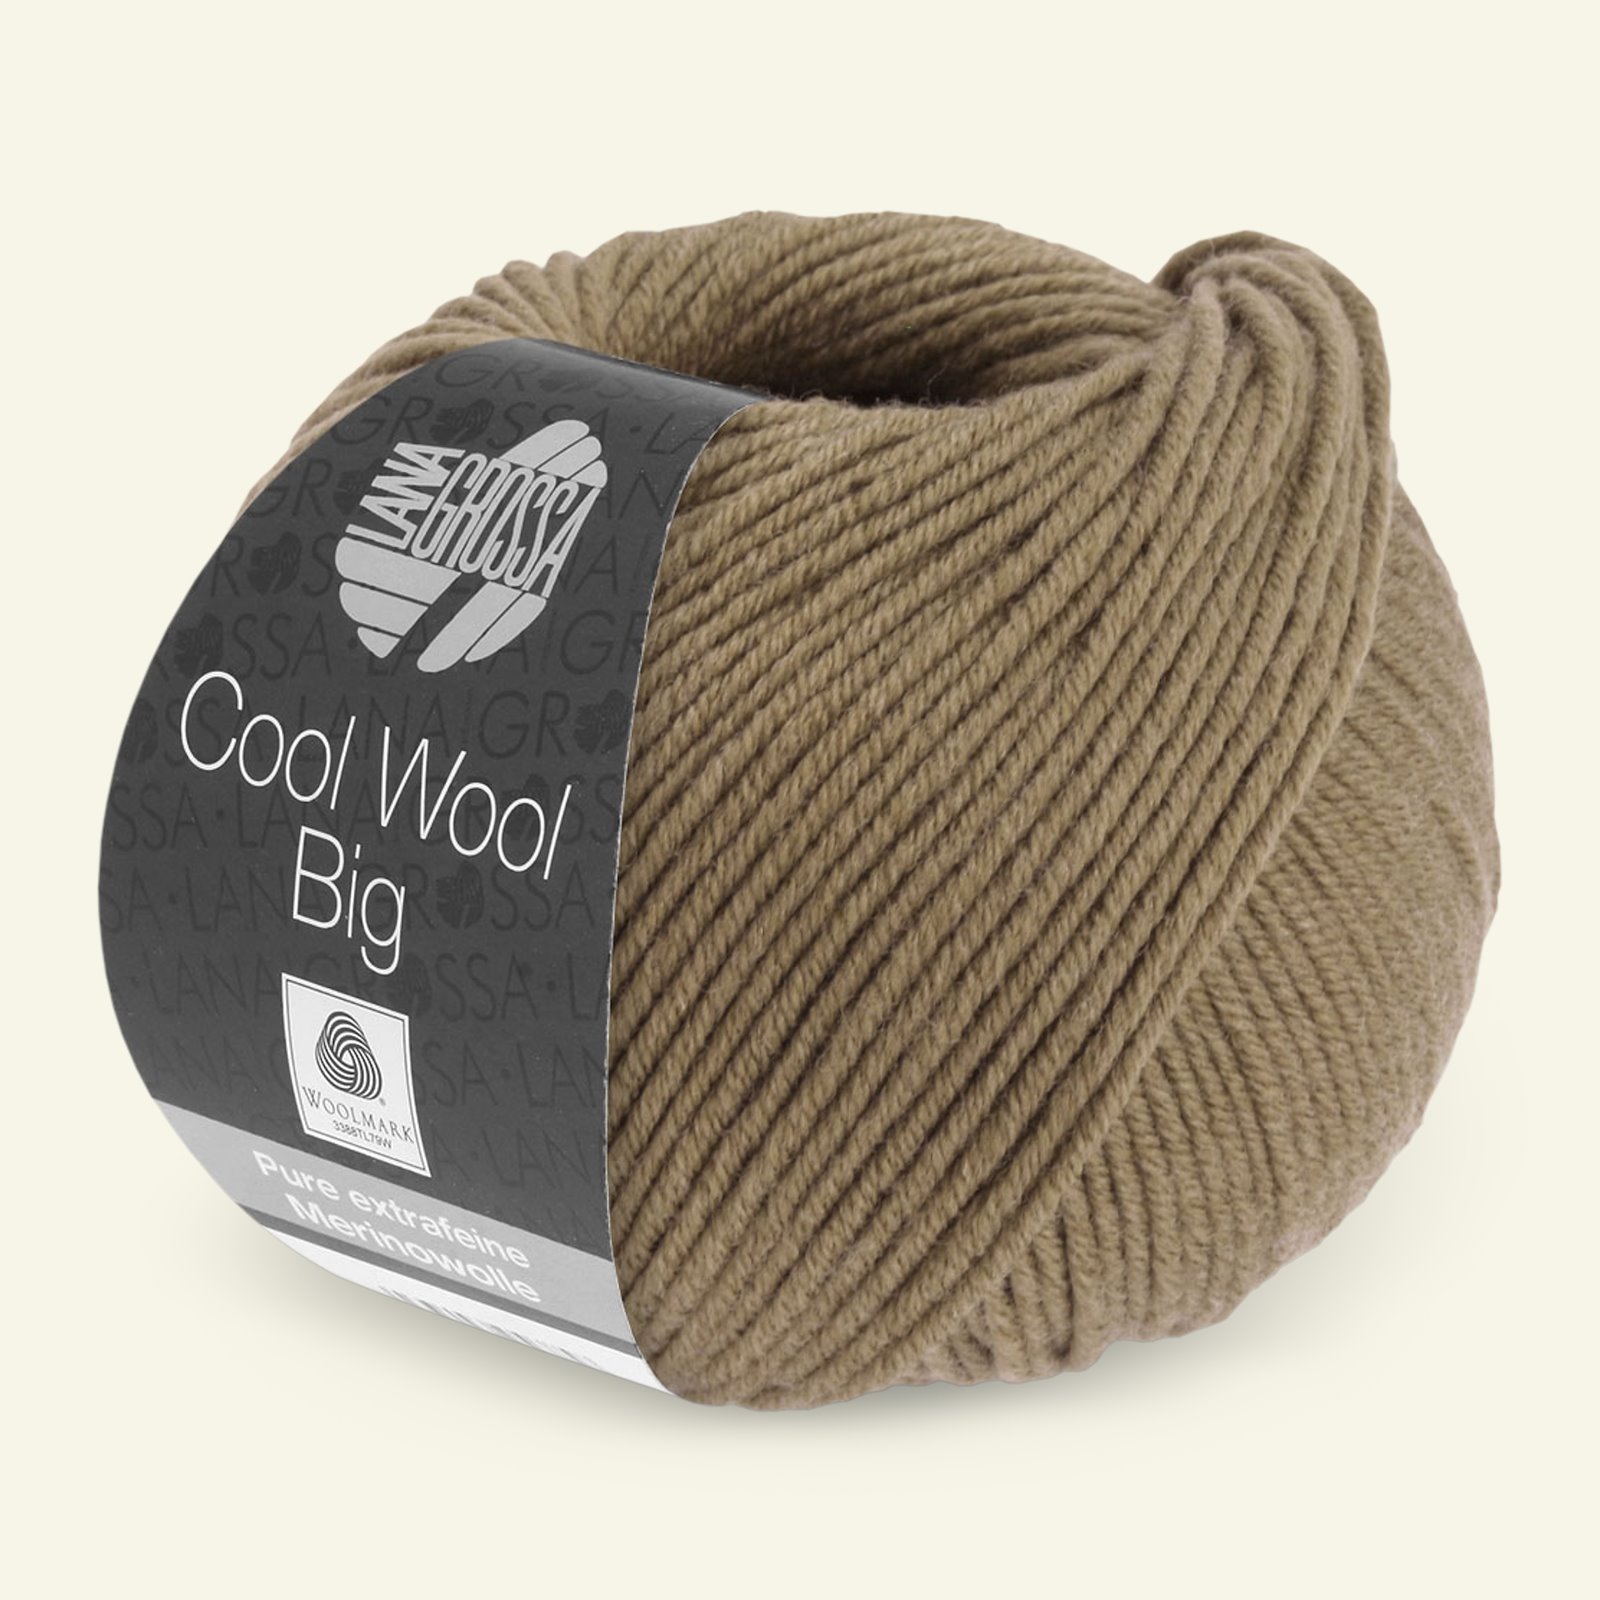 Lana Grossa, extrafine merino wool yarn "Cool Wool Big", hazelnut 90001110_pack